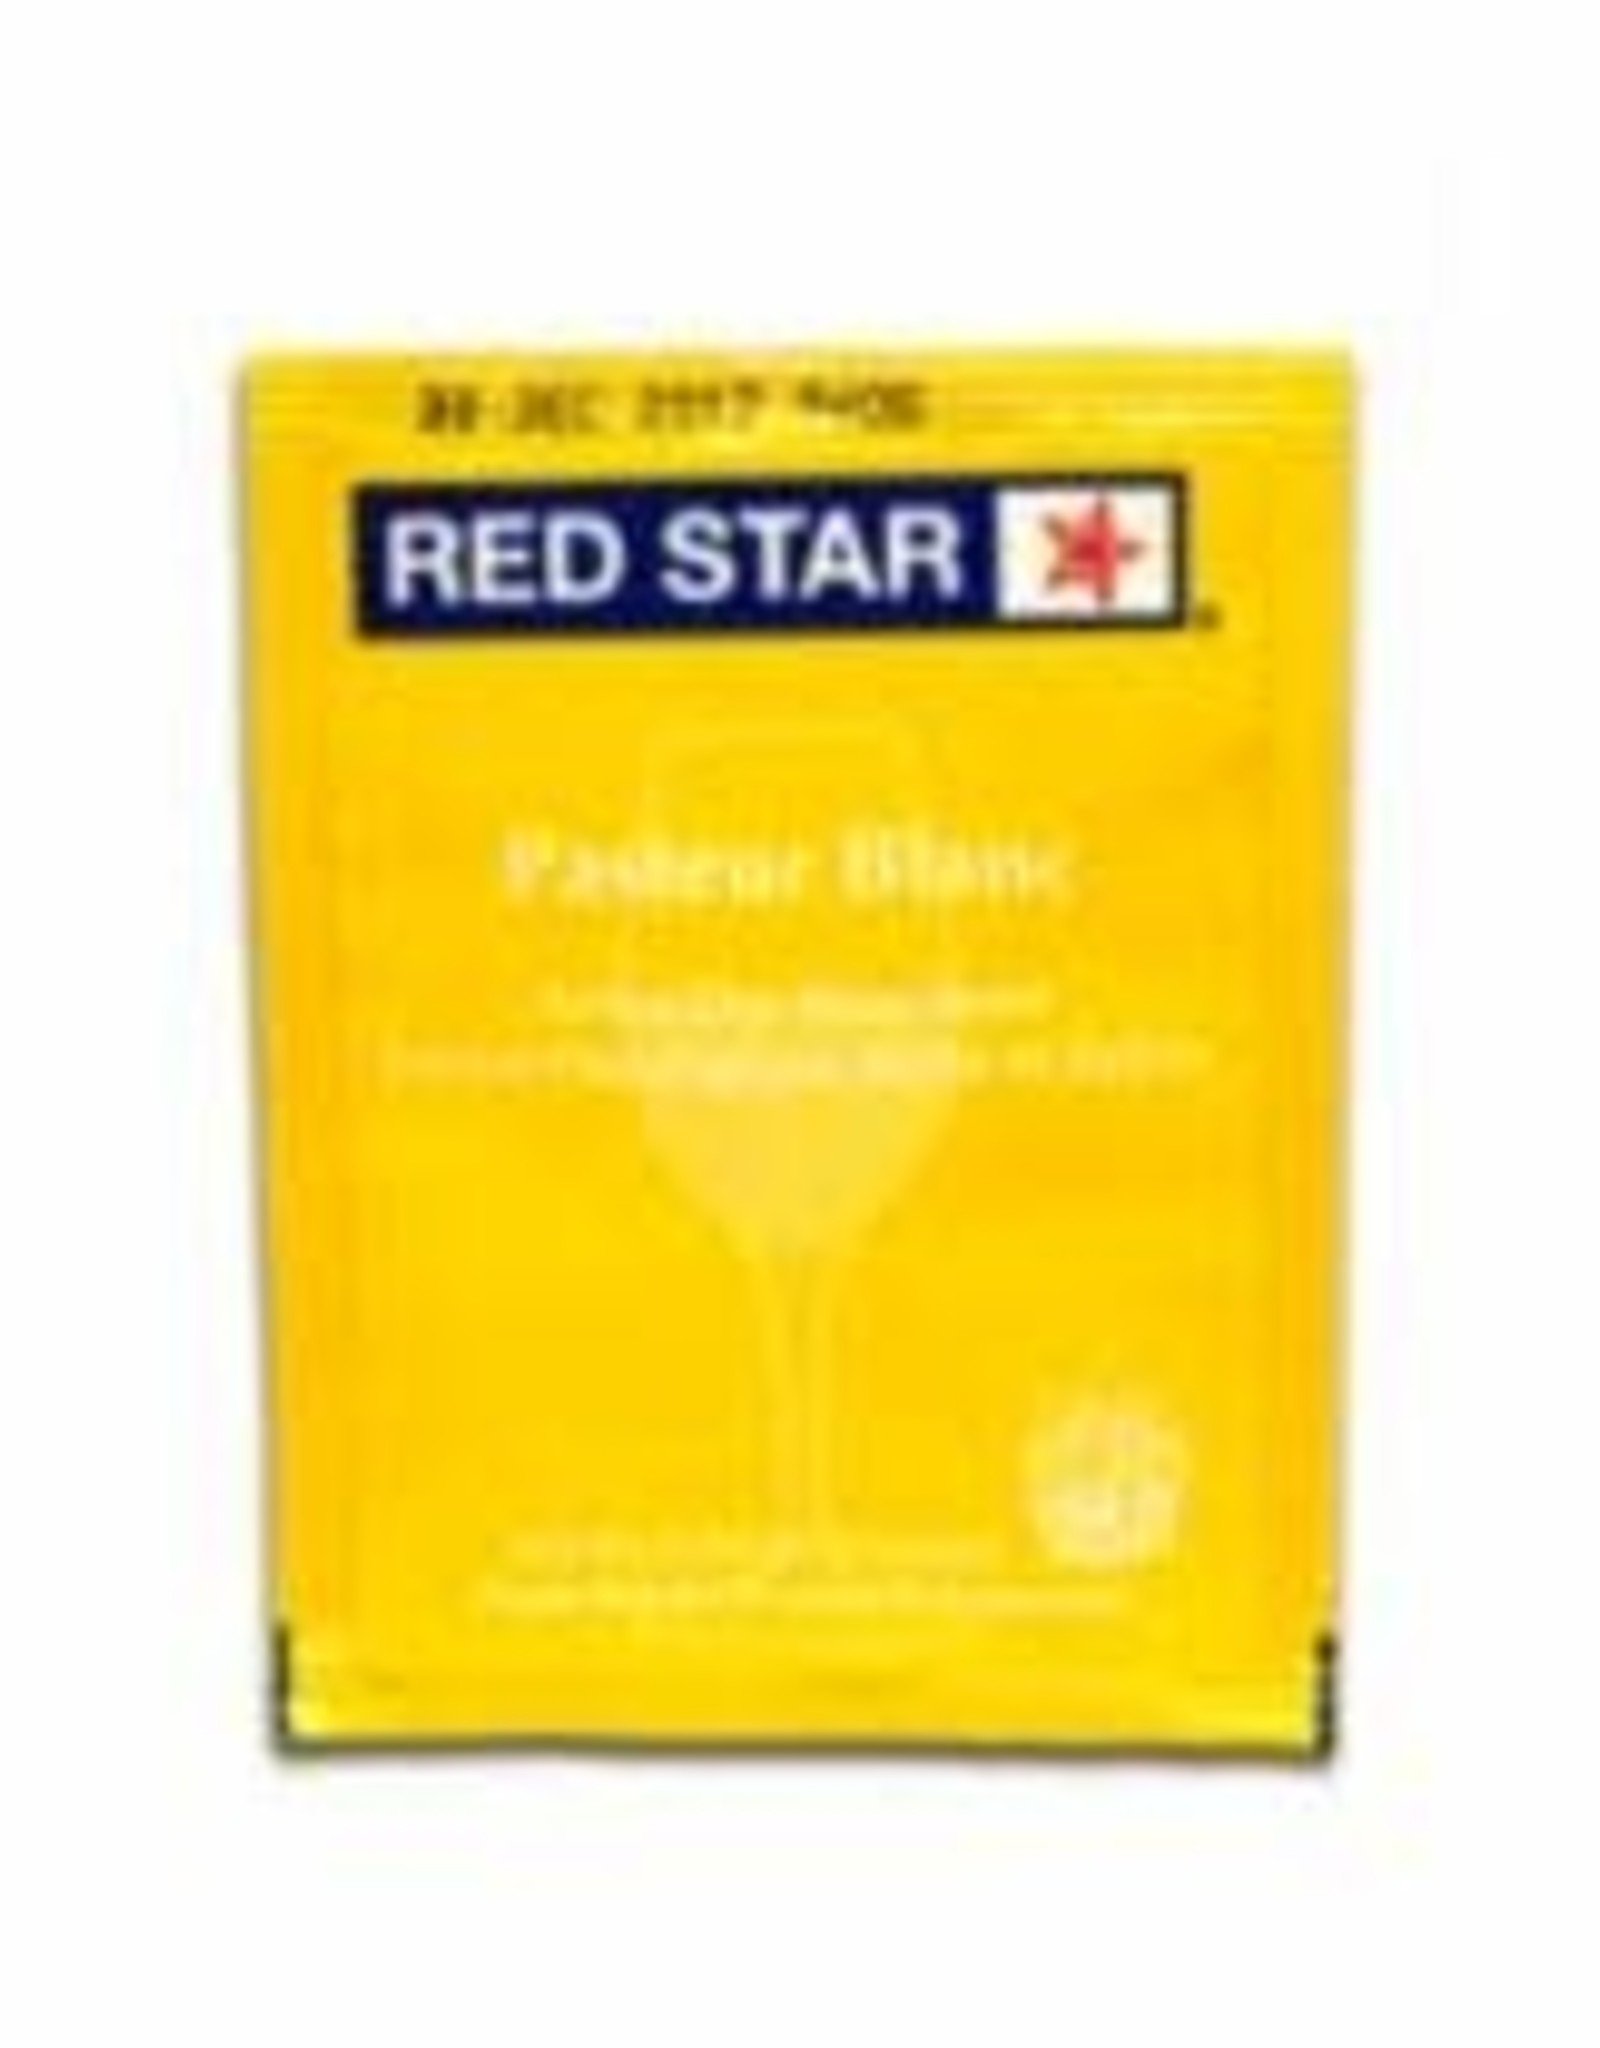 Red Star Premier Cuvee Yeast